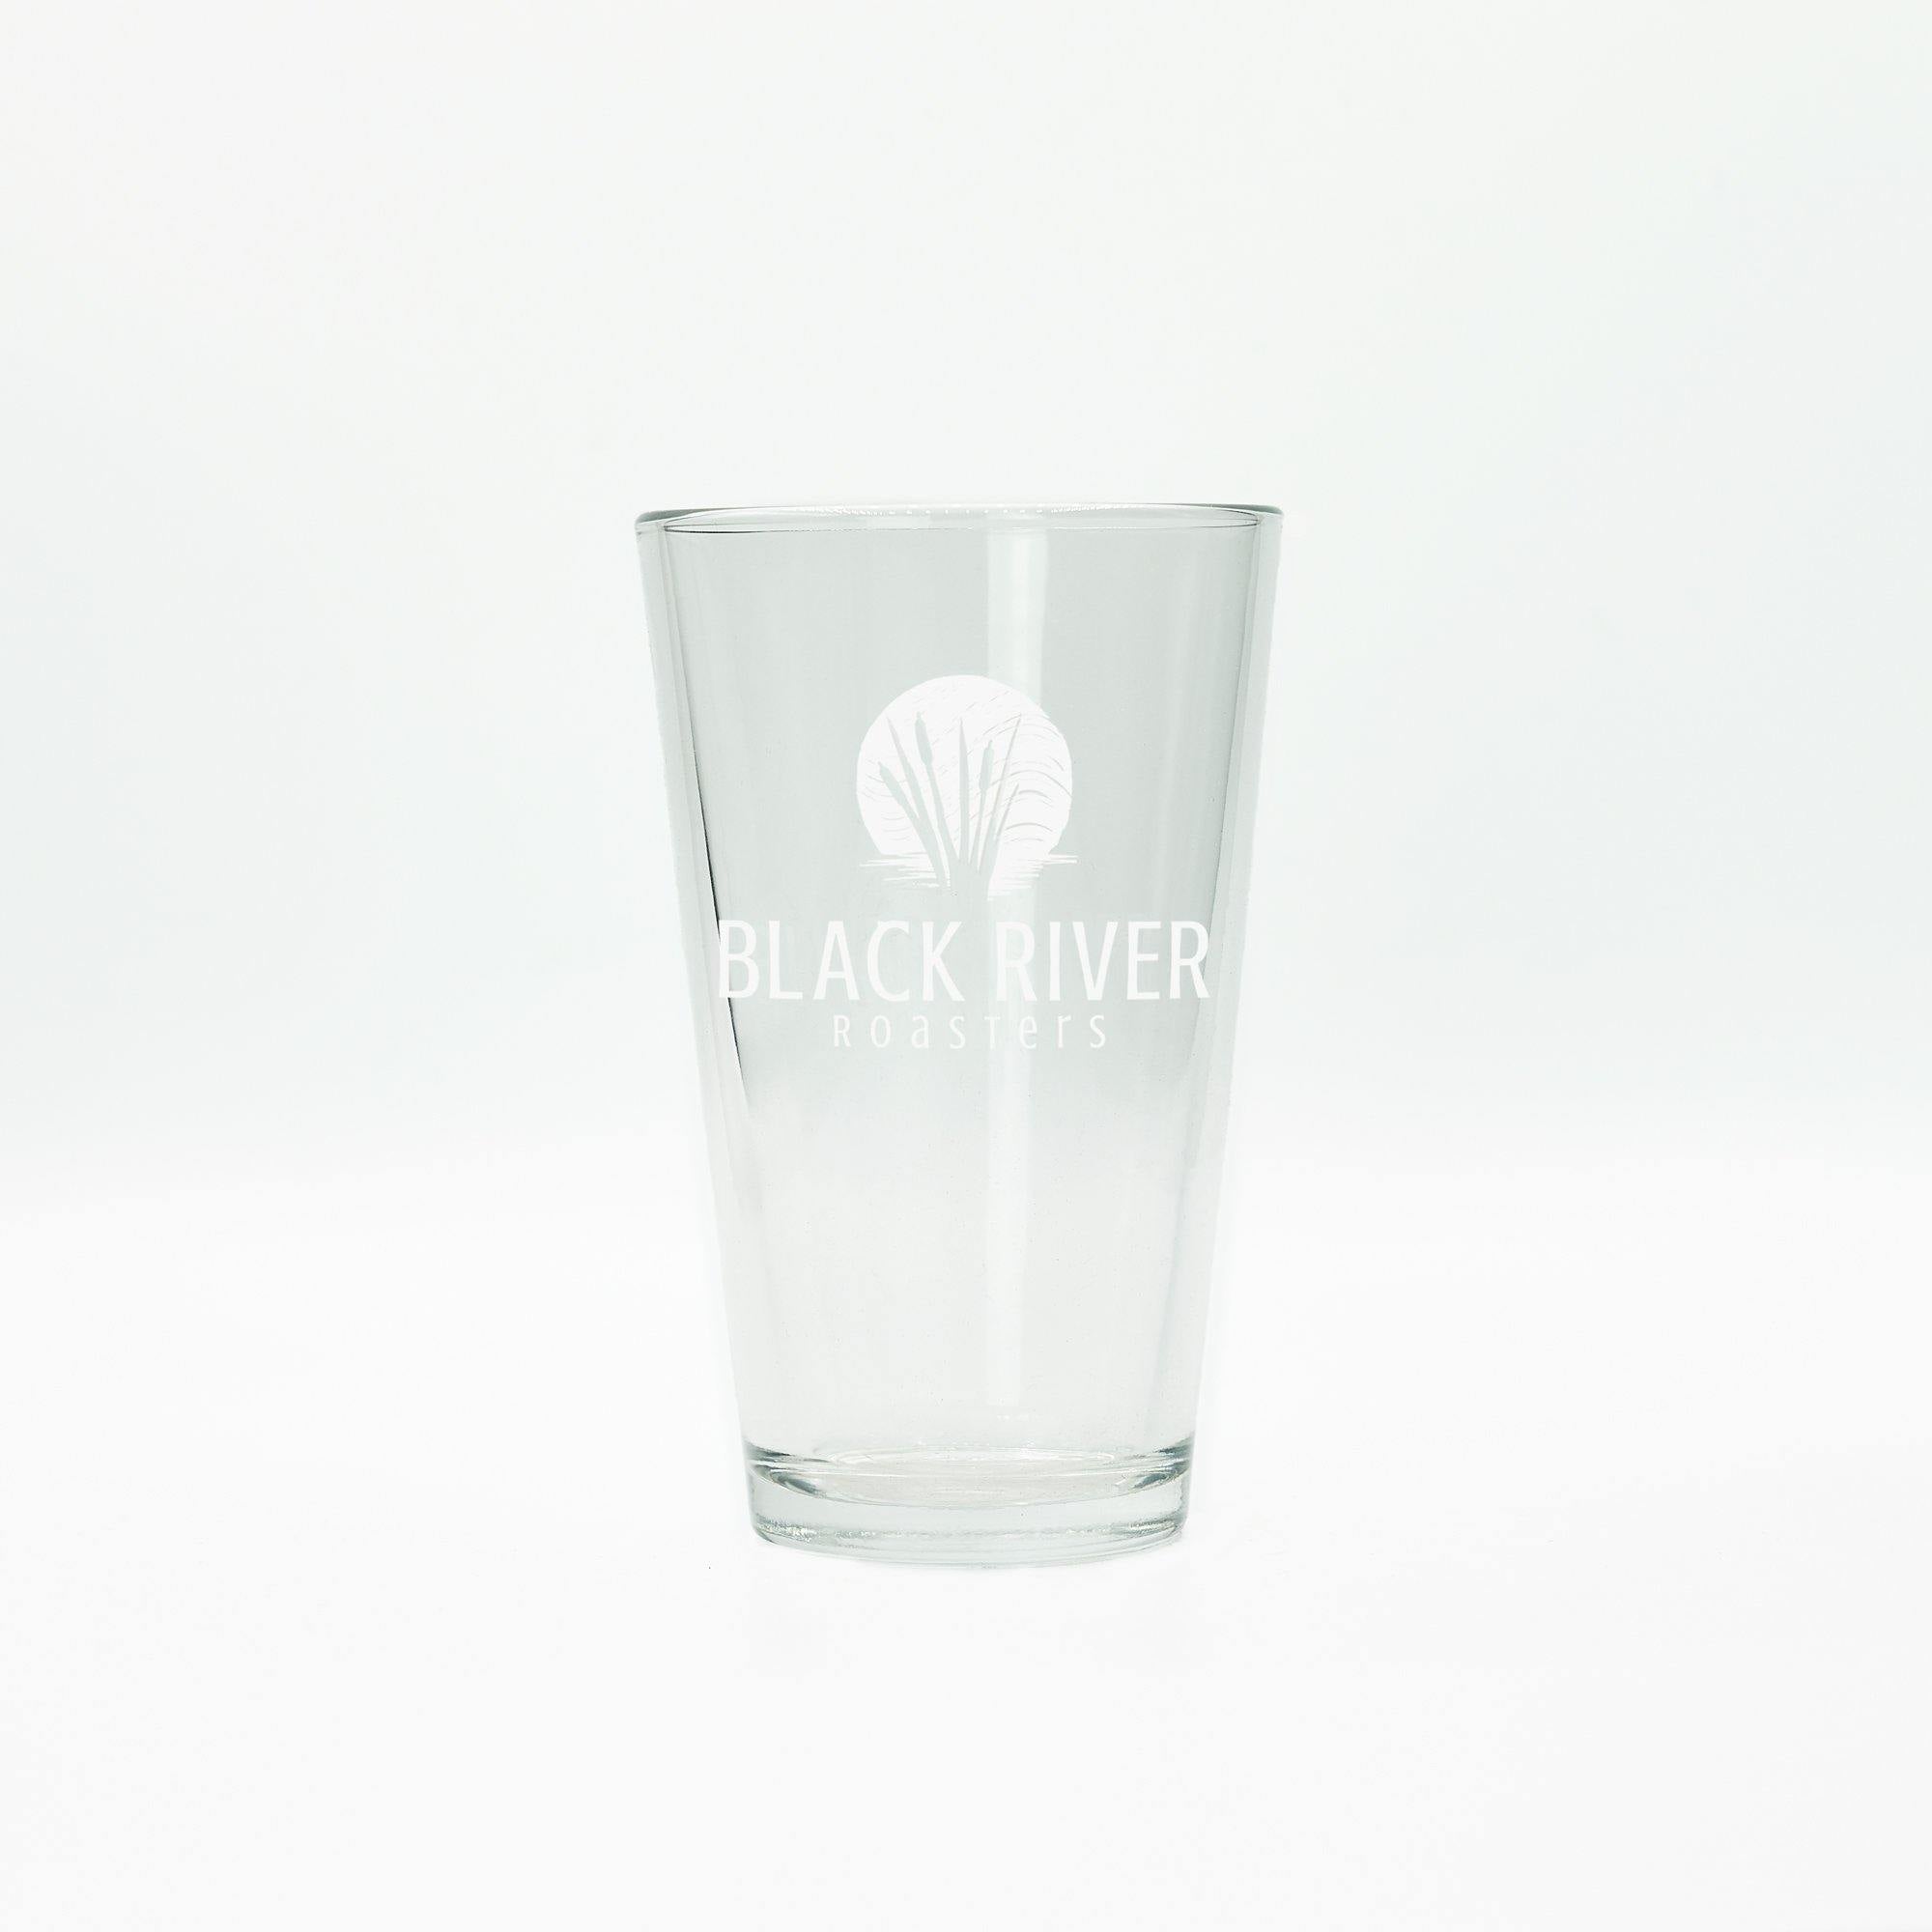 Black River Roasters 12 oz "Pint" Glass - Black River Roasters